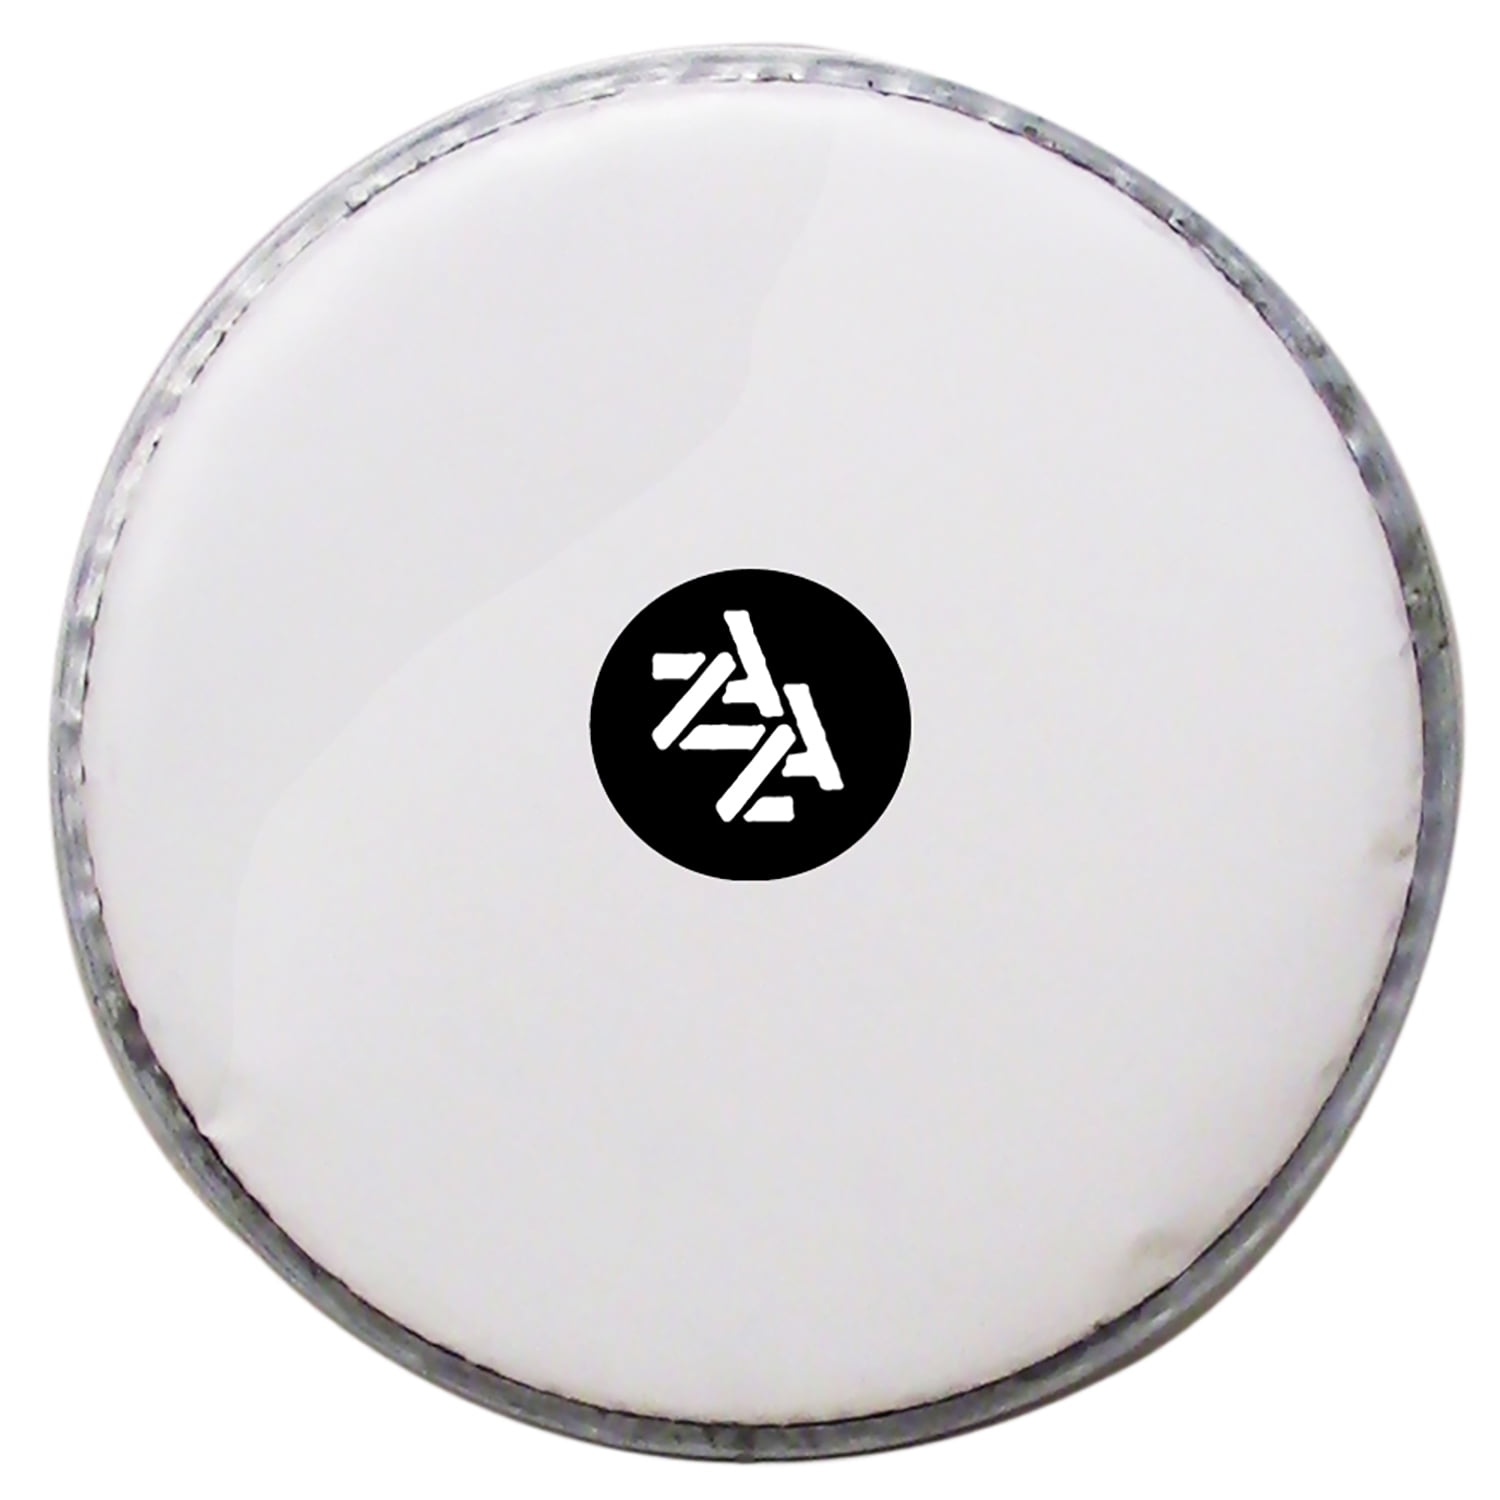 White Zaza Percussion Drum Head For Darbuka /Doumbek 8.5/8" 